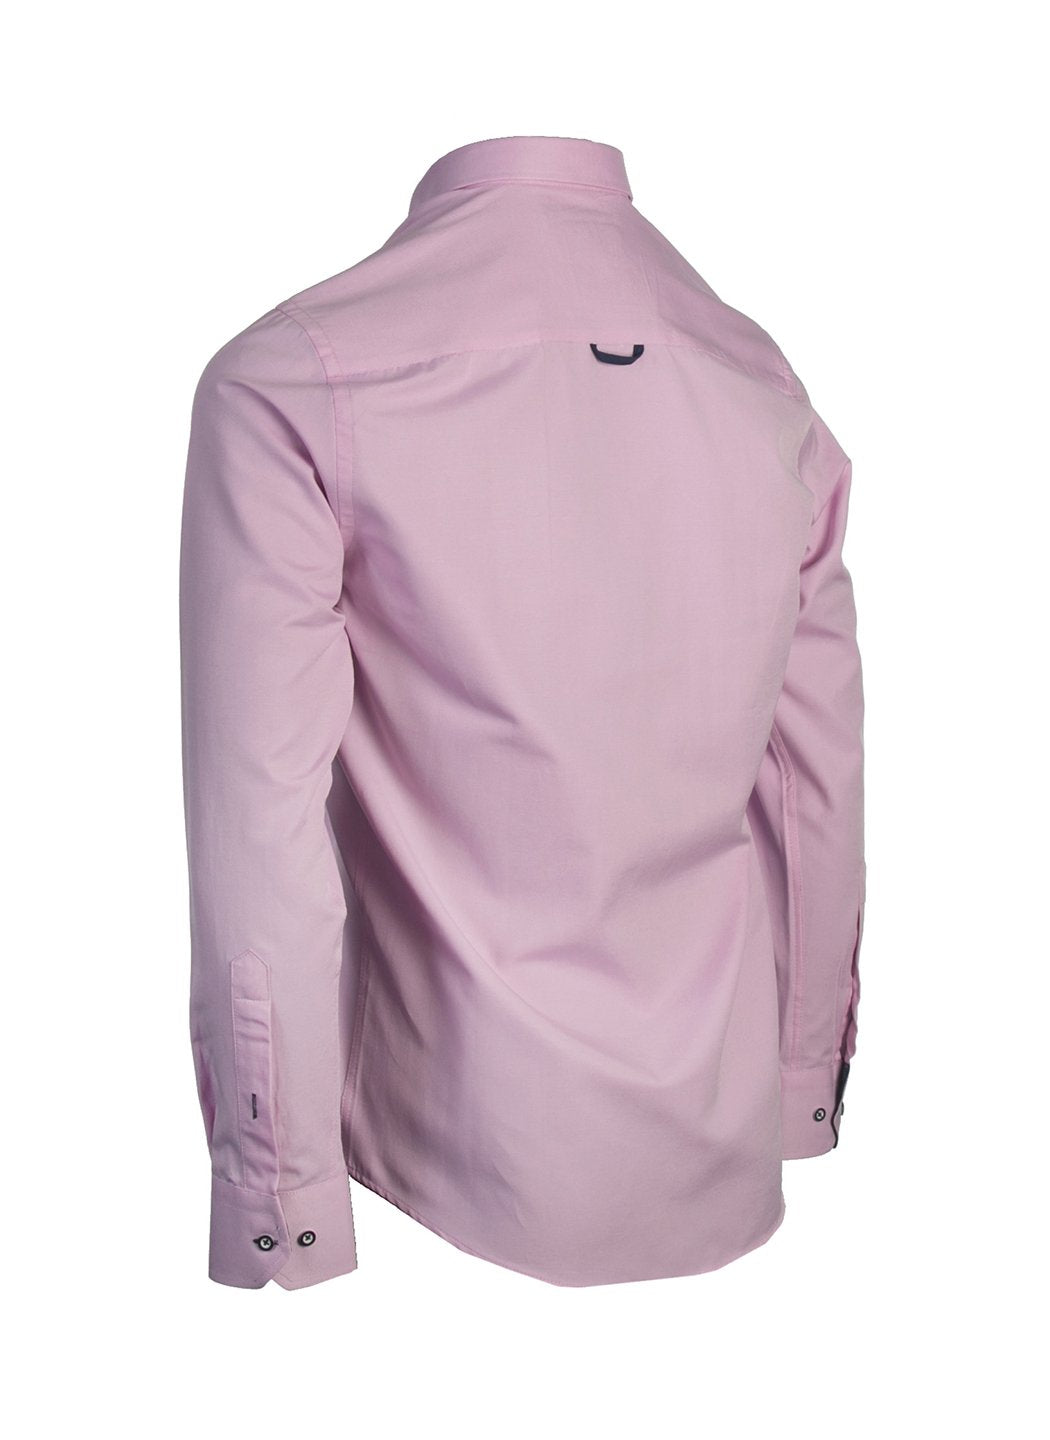 Lolland Pink Oxford Shirt